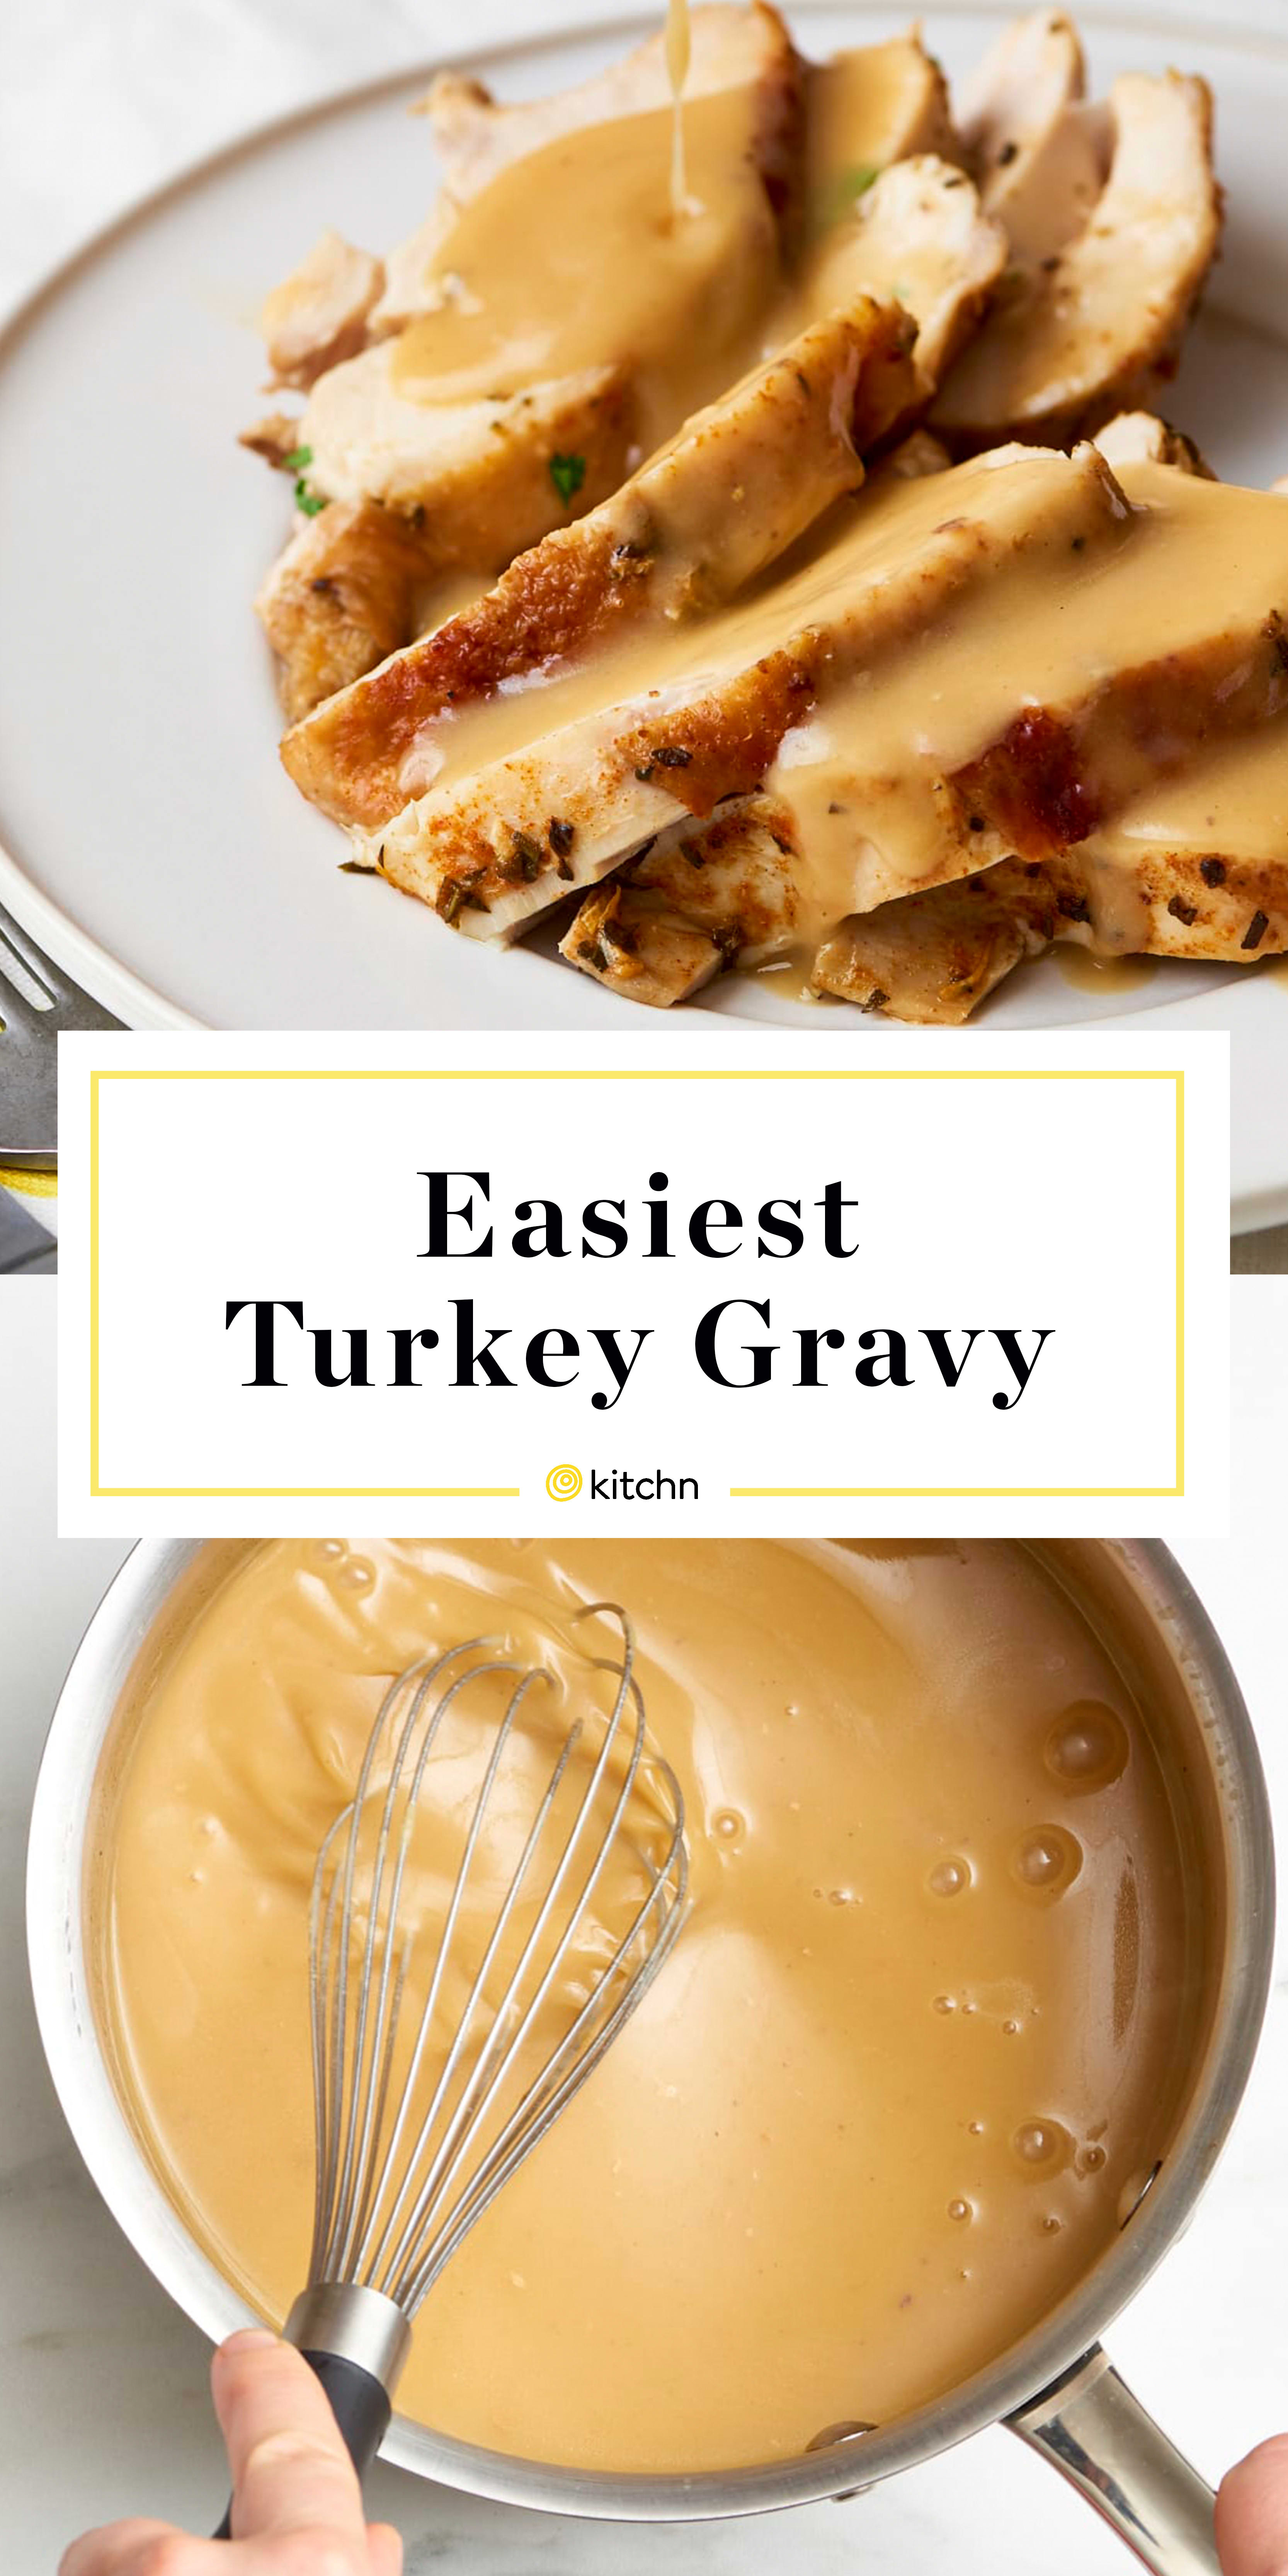 How To Make an Easy Turkey Gravy